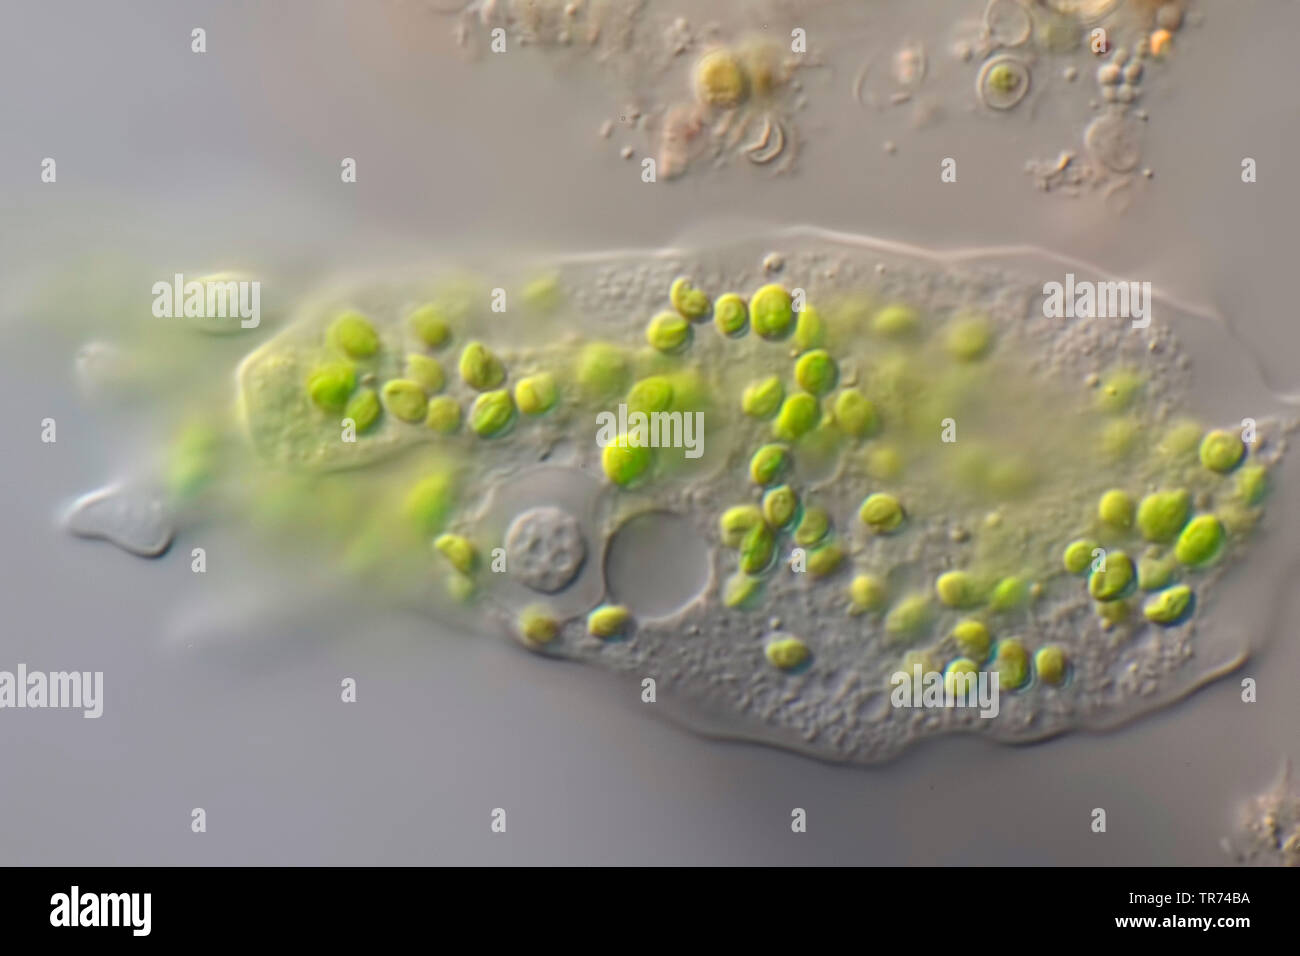 amebas, amoebas (Amoebozoa), amoeba feeding on green algae, Differential interference contrast microscopy Stock Photo